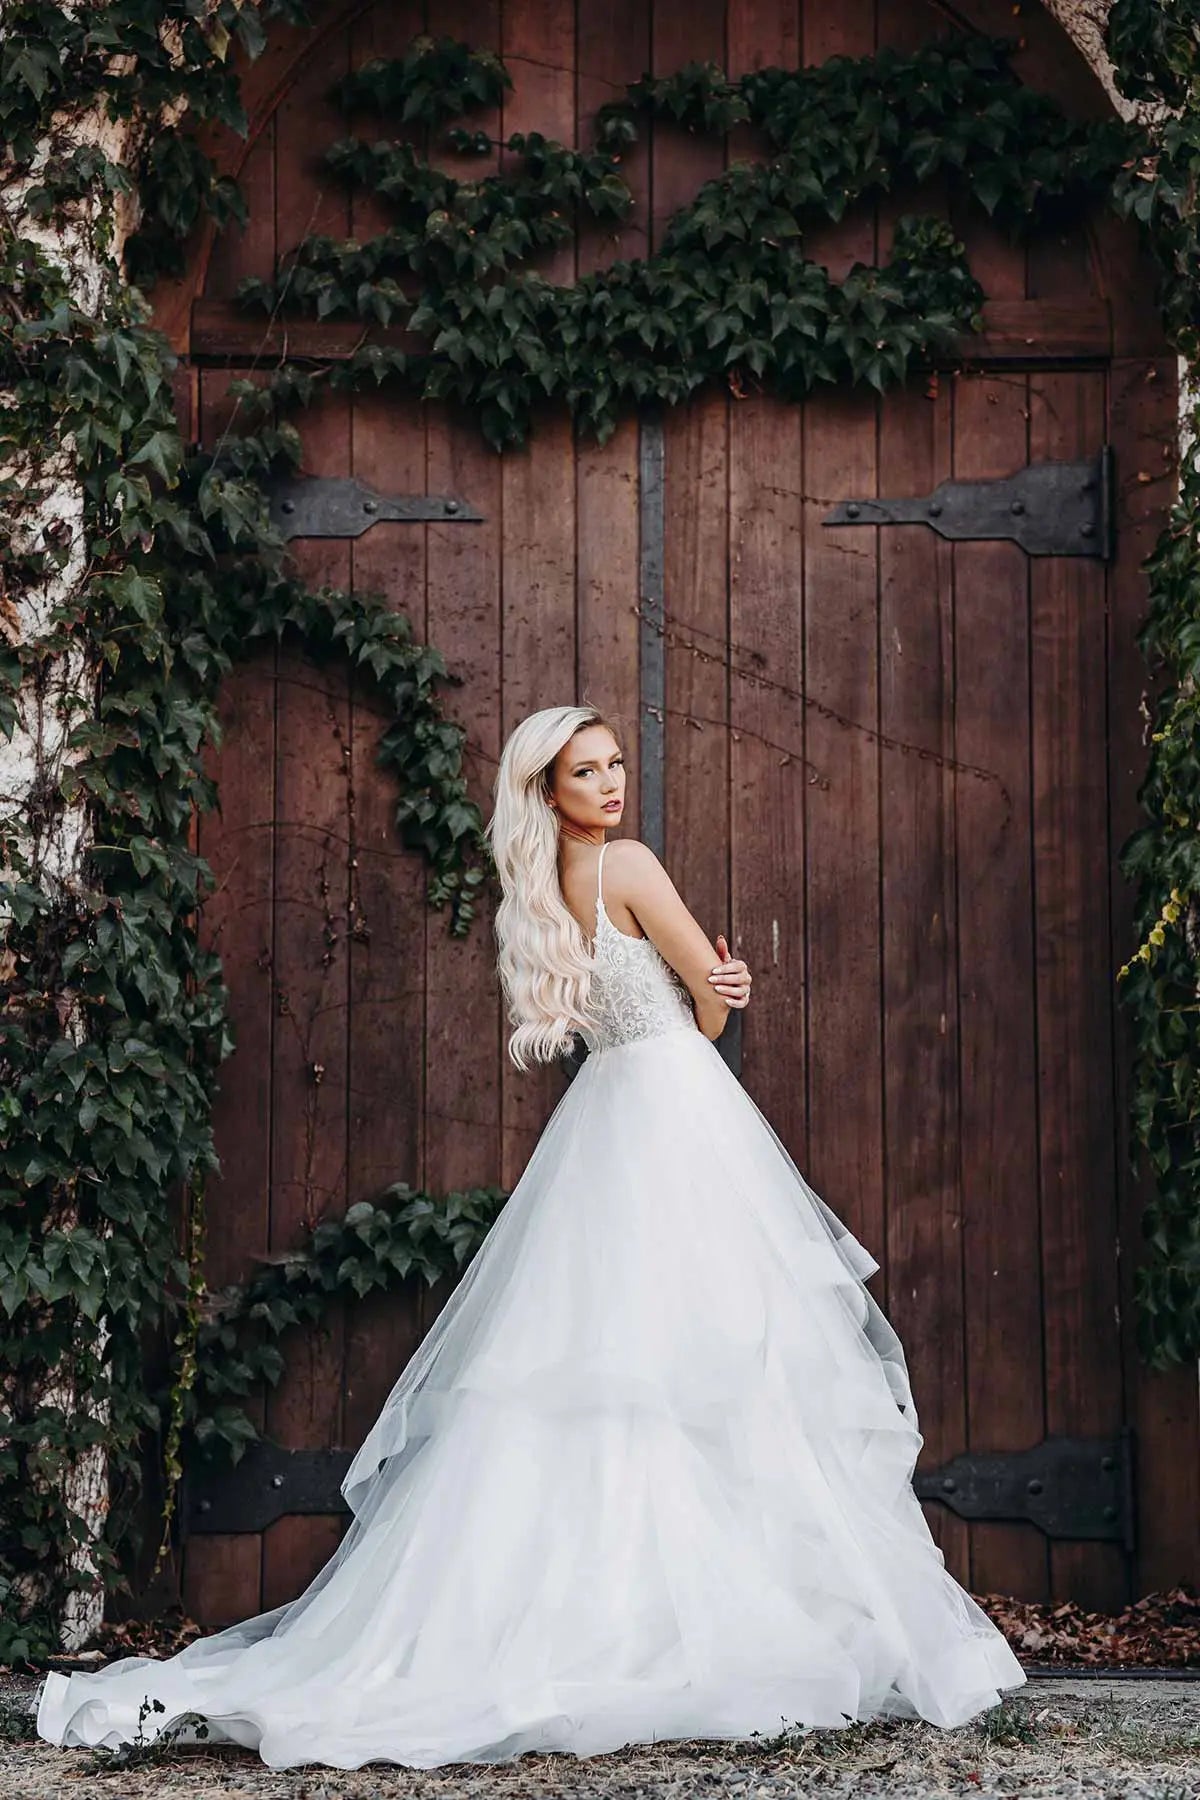 The Beautiful Frame Company Wedding Dress Framers, 41% OFF